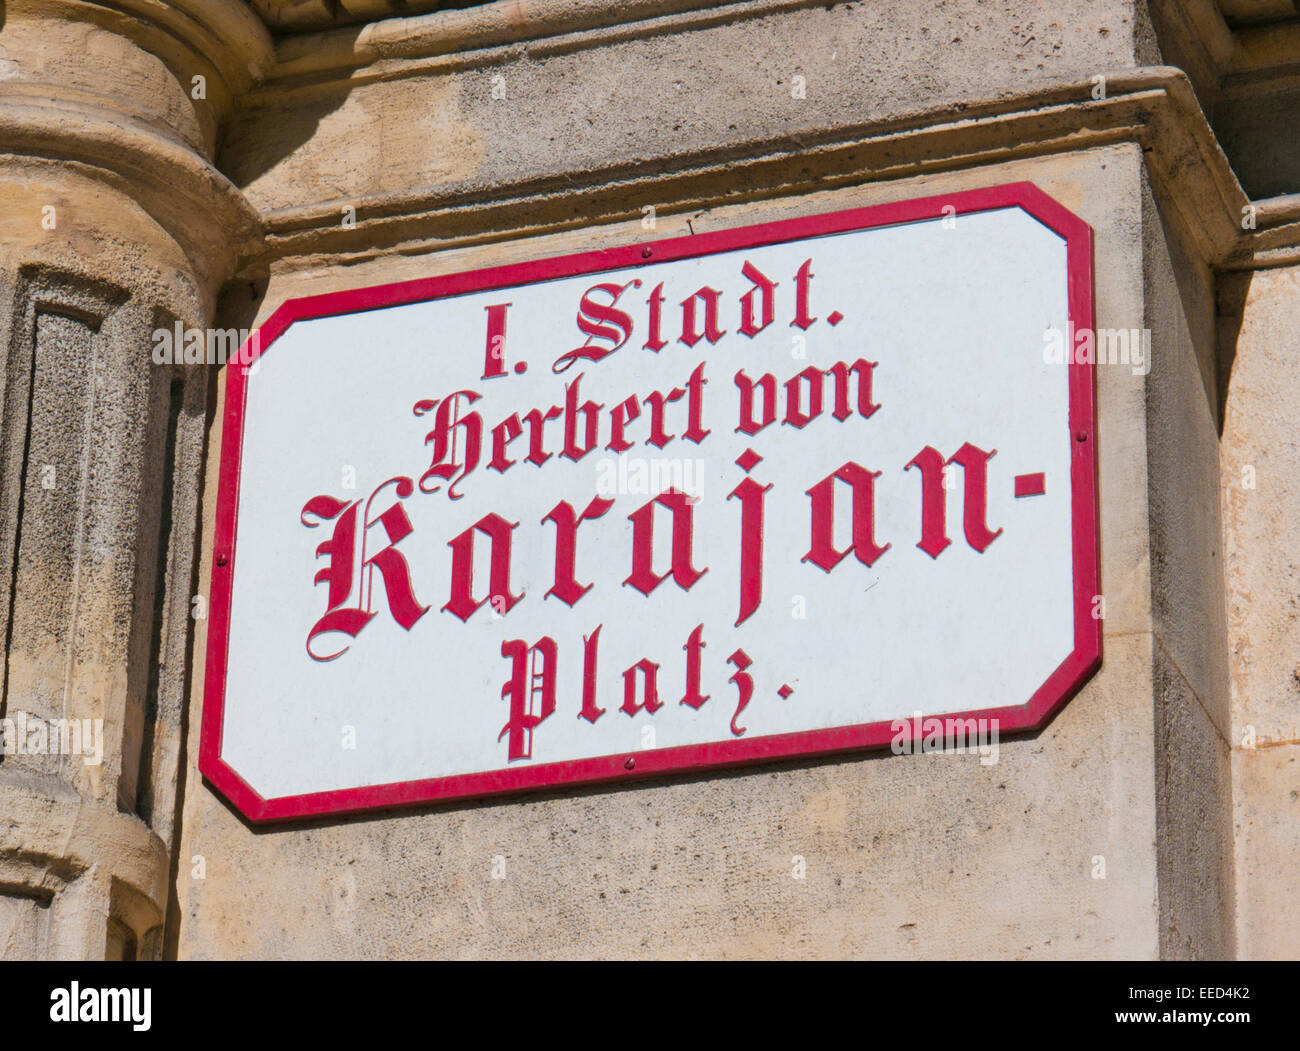 Herbert von Karajan Platz casa de la Ópera de Viena en Austria Foto de stock